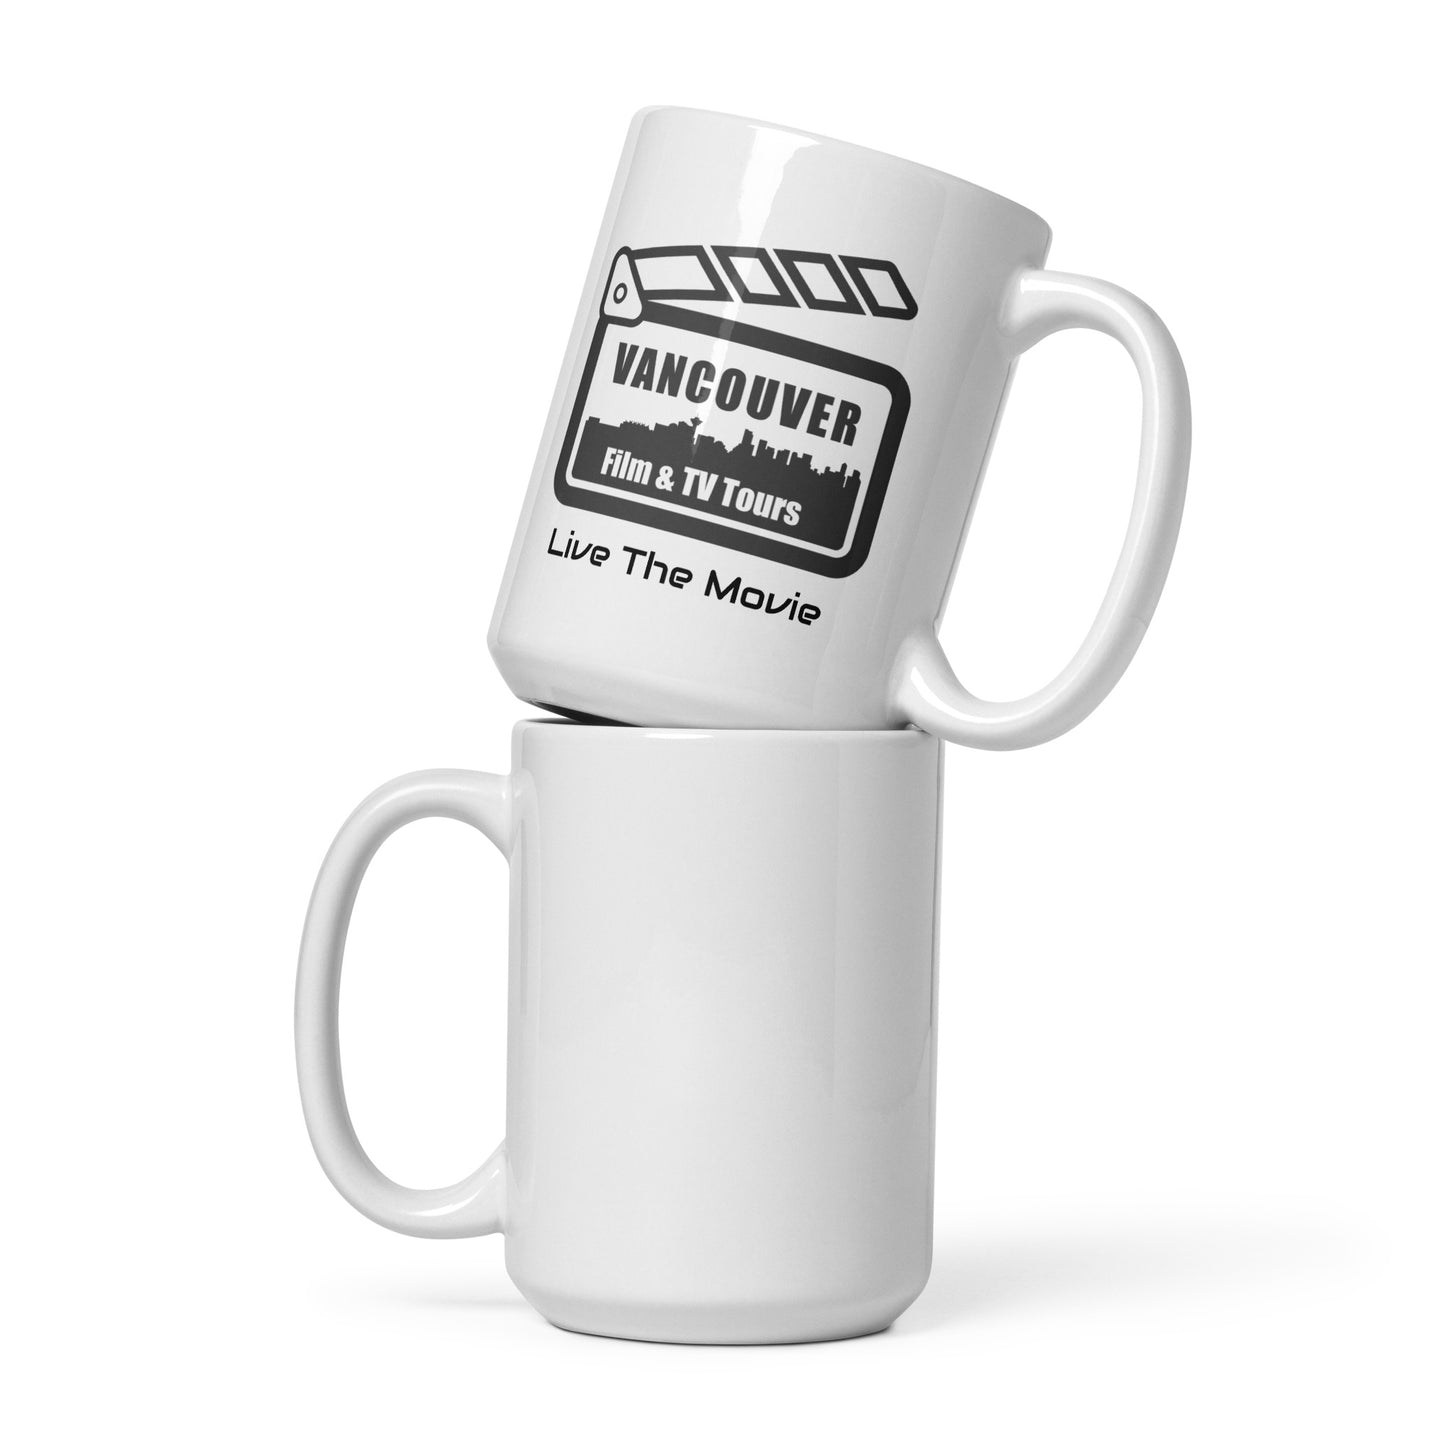 Vancouver Film & TV Tours: Official Coffee Mug